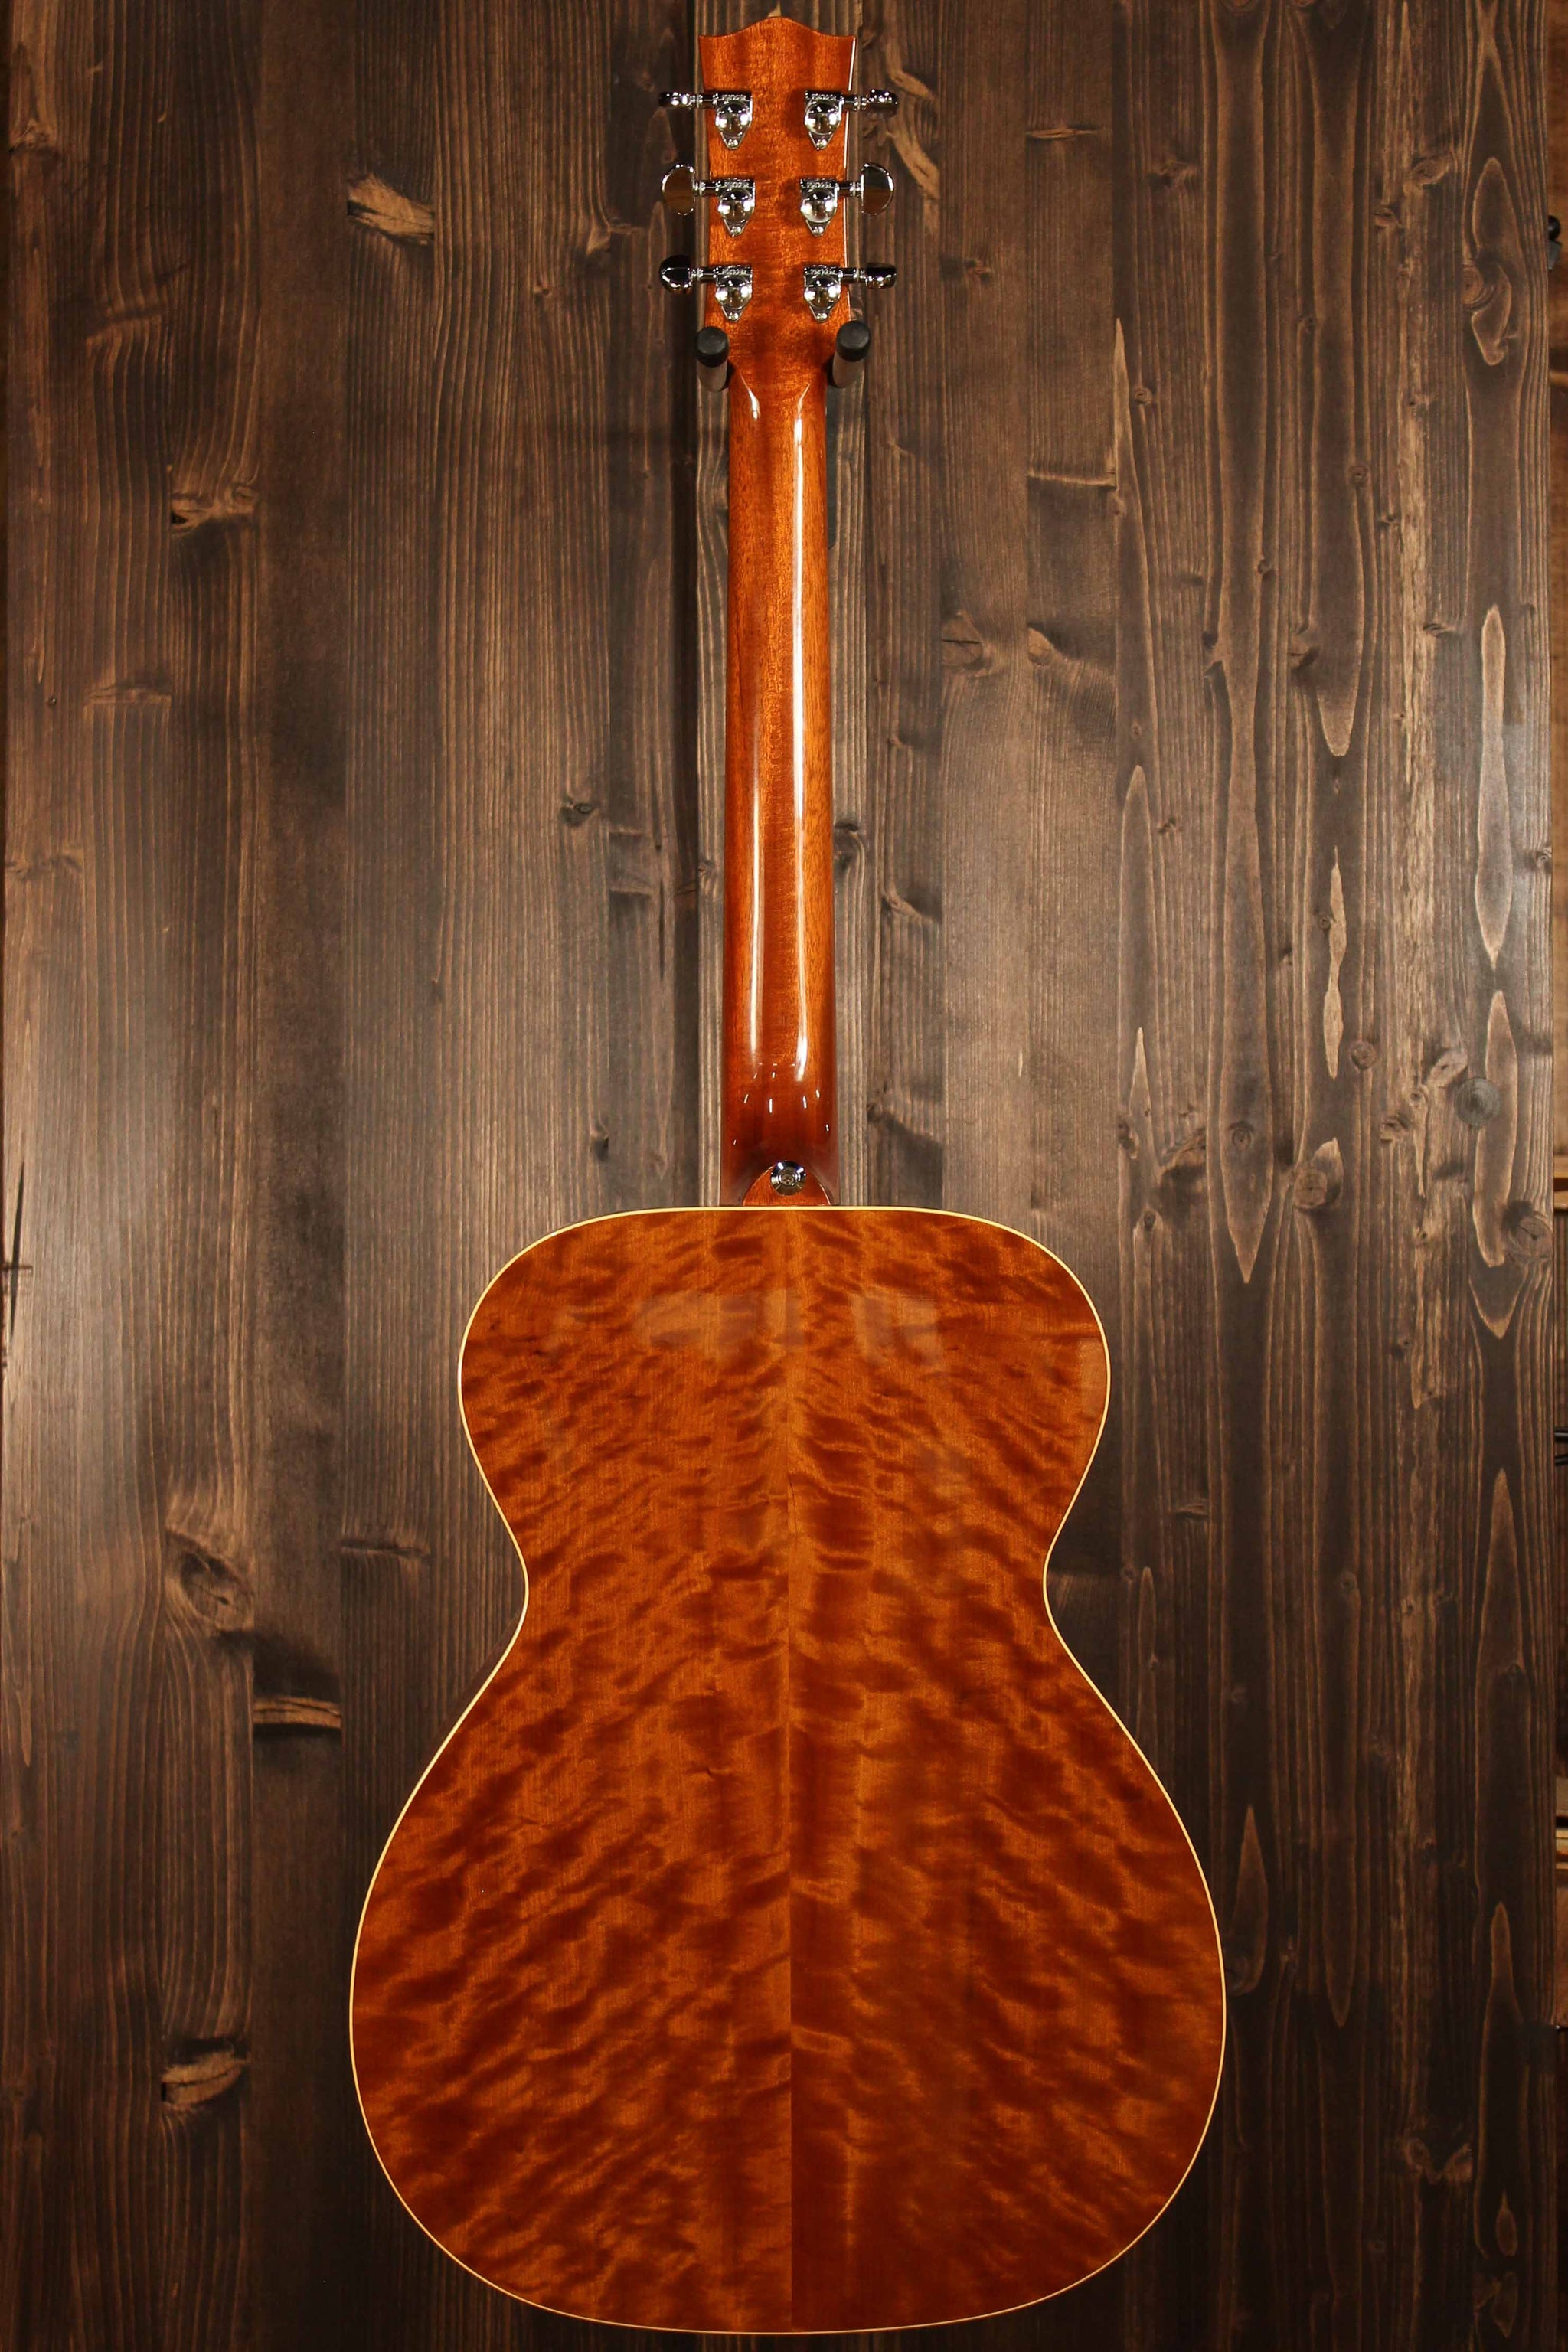 Maton Custom Shop Traditional Certified Guitars from Tommy Emmanuel - 14512 - Artisan Guitars